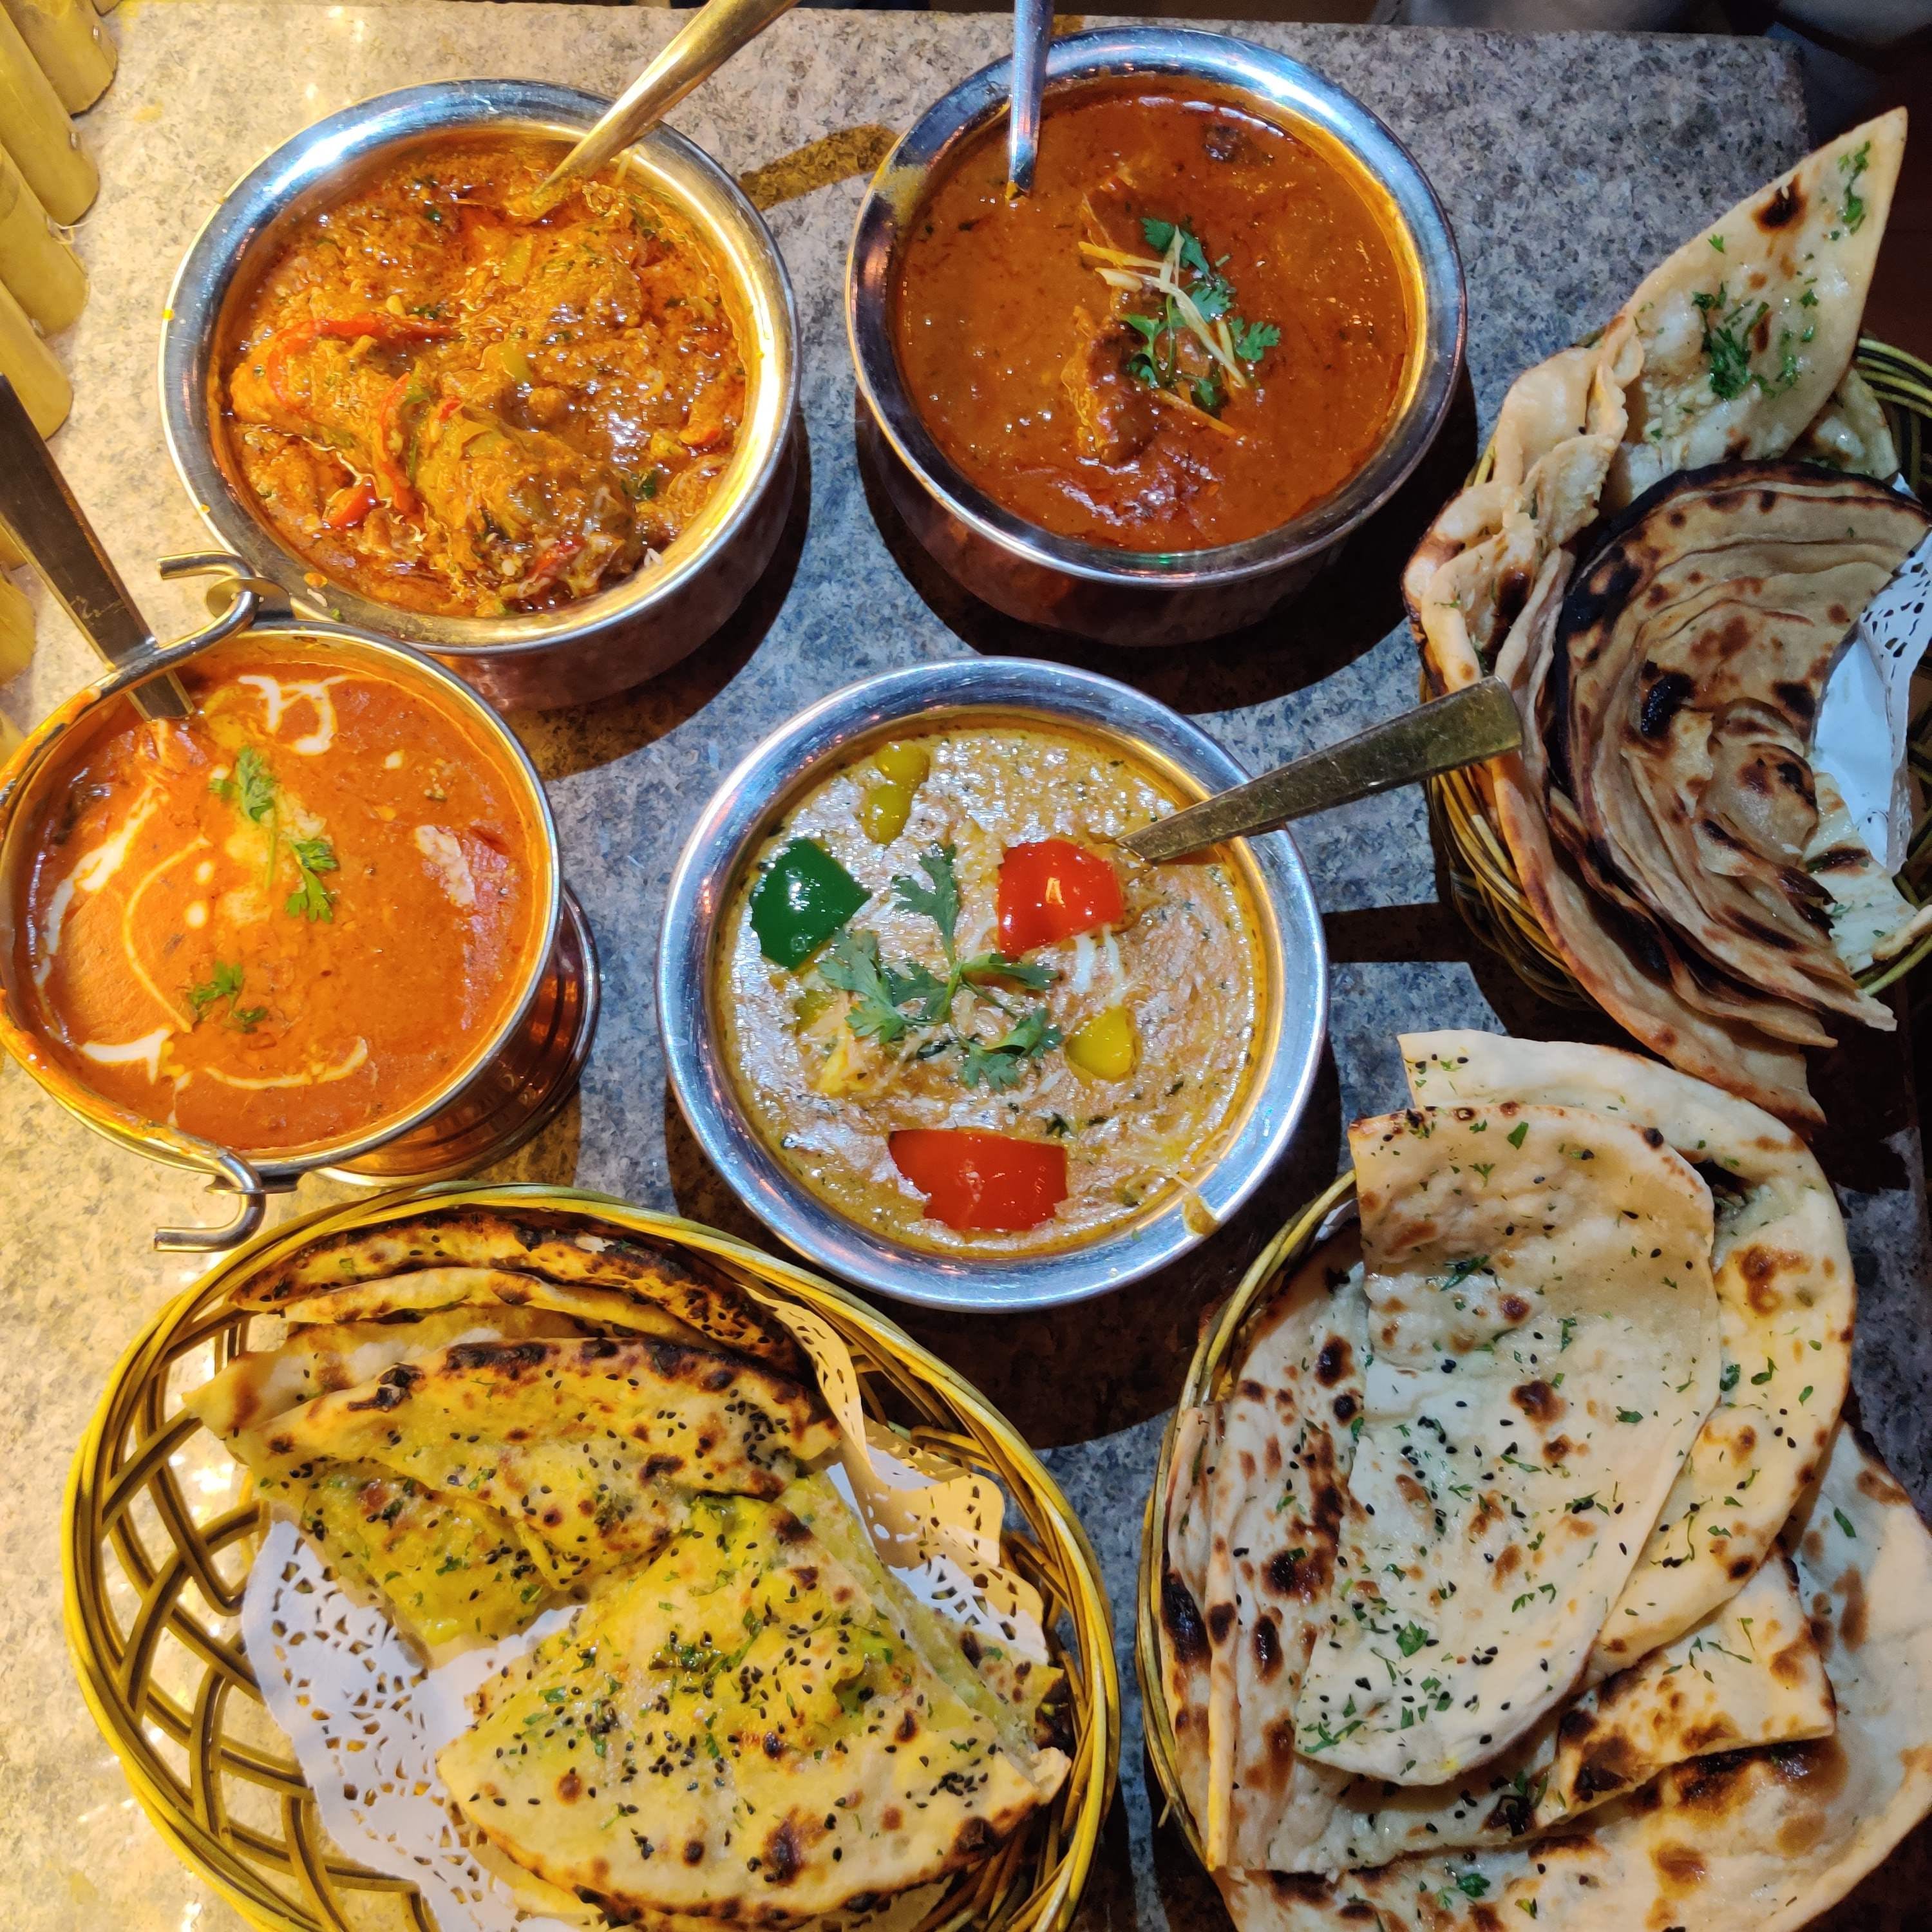 Dish,Food,Cuisine,Naan,Ingredient,Punjabi cuisine,Chapati,Produce,Indian cuisine,Flatbread